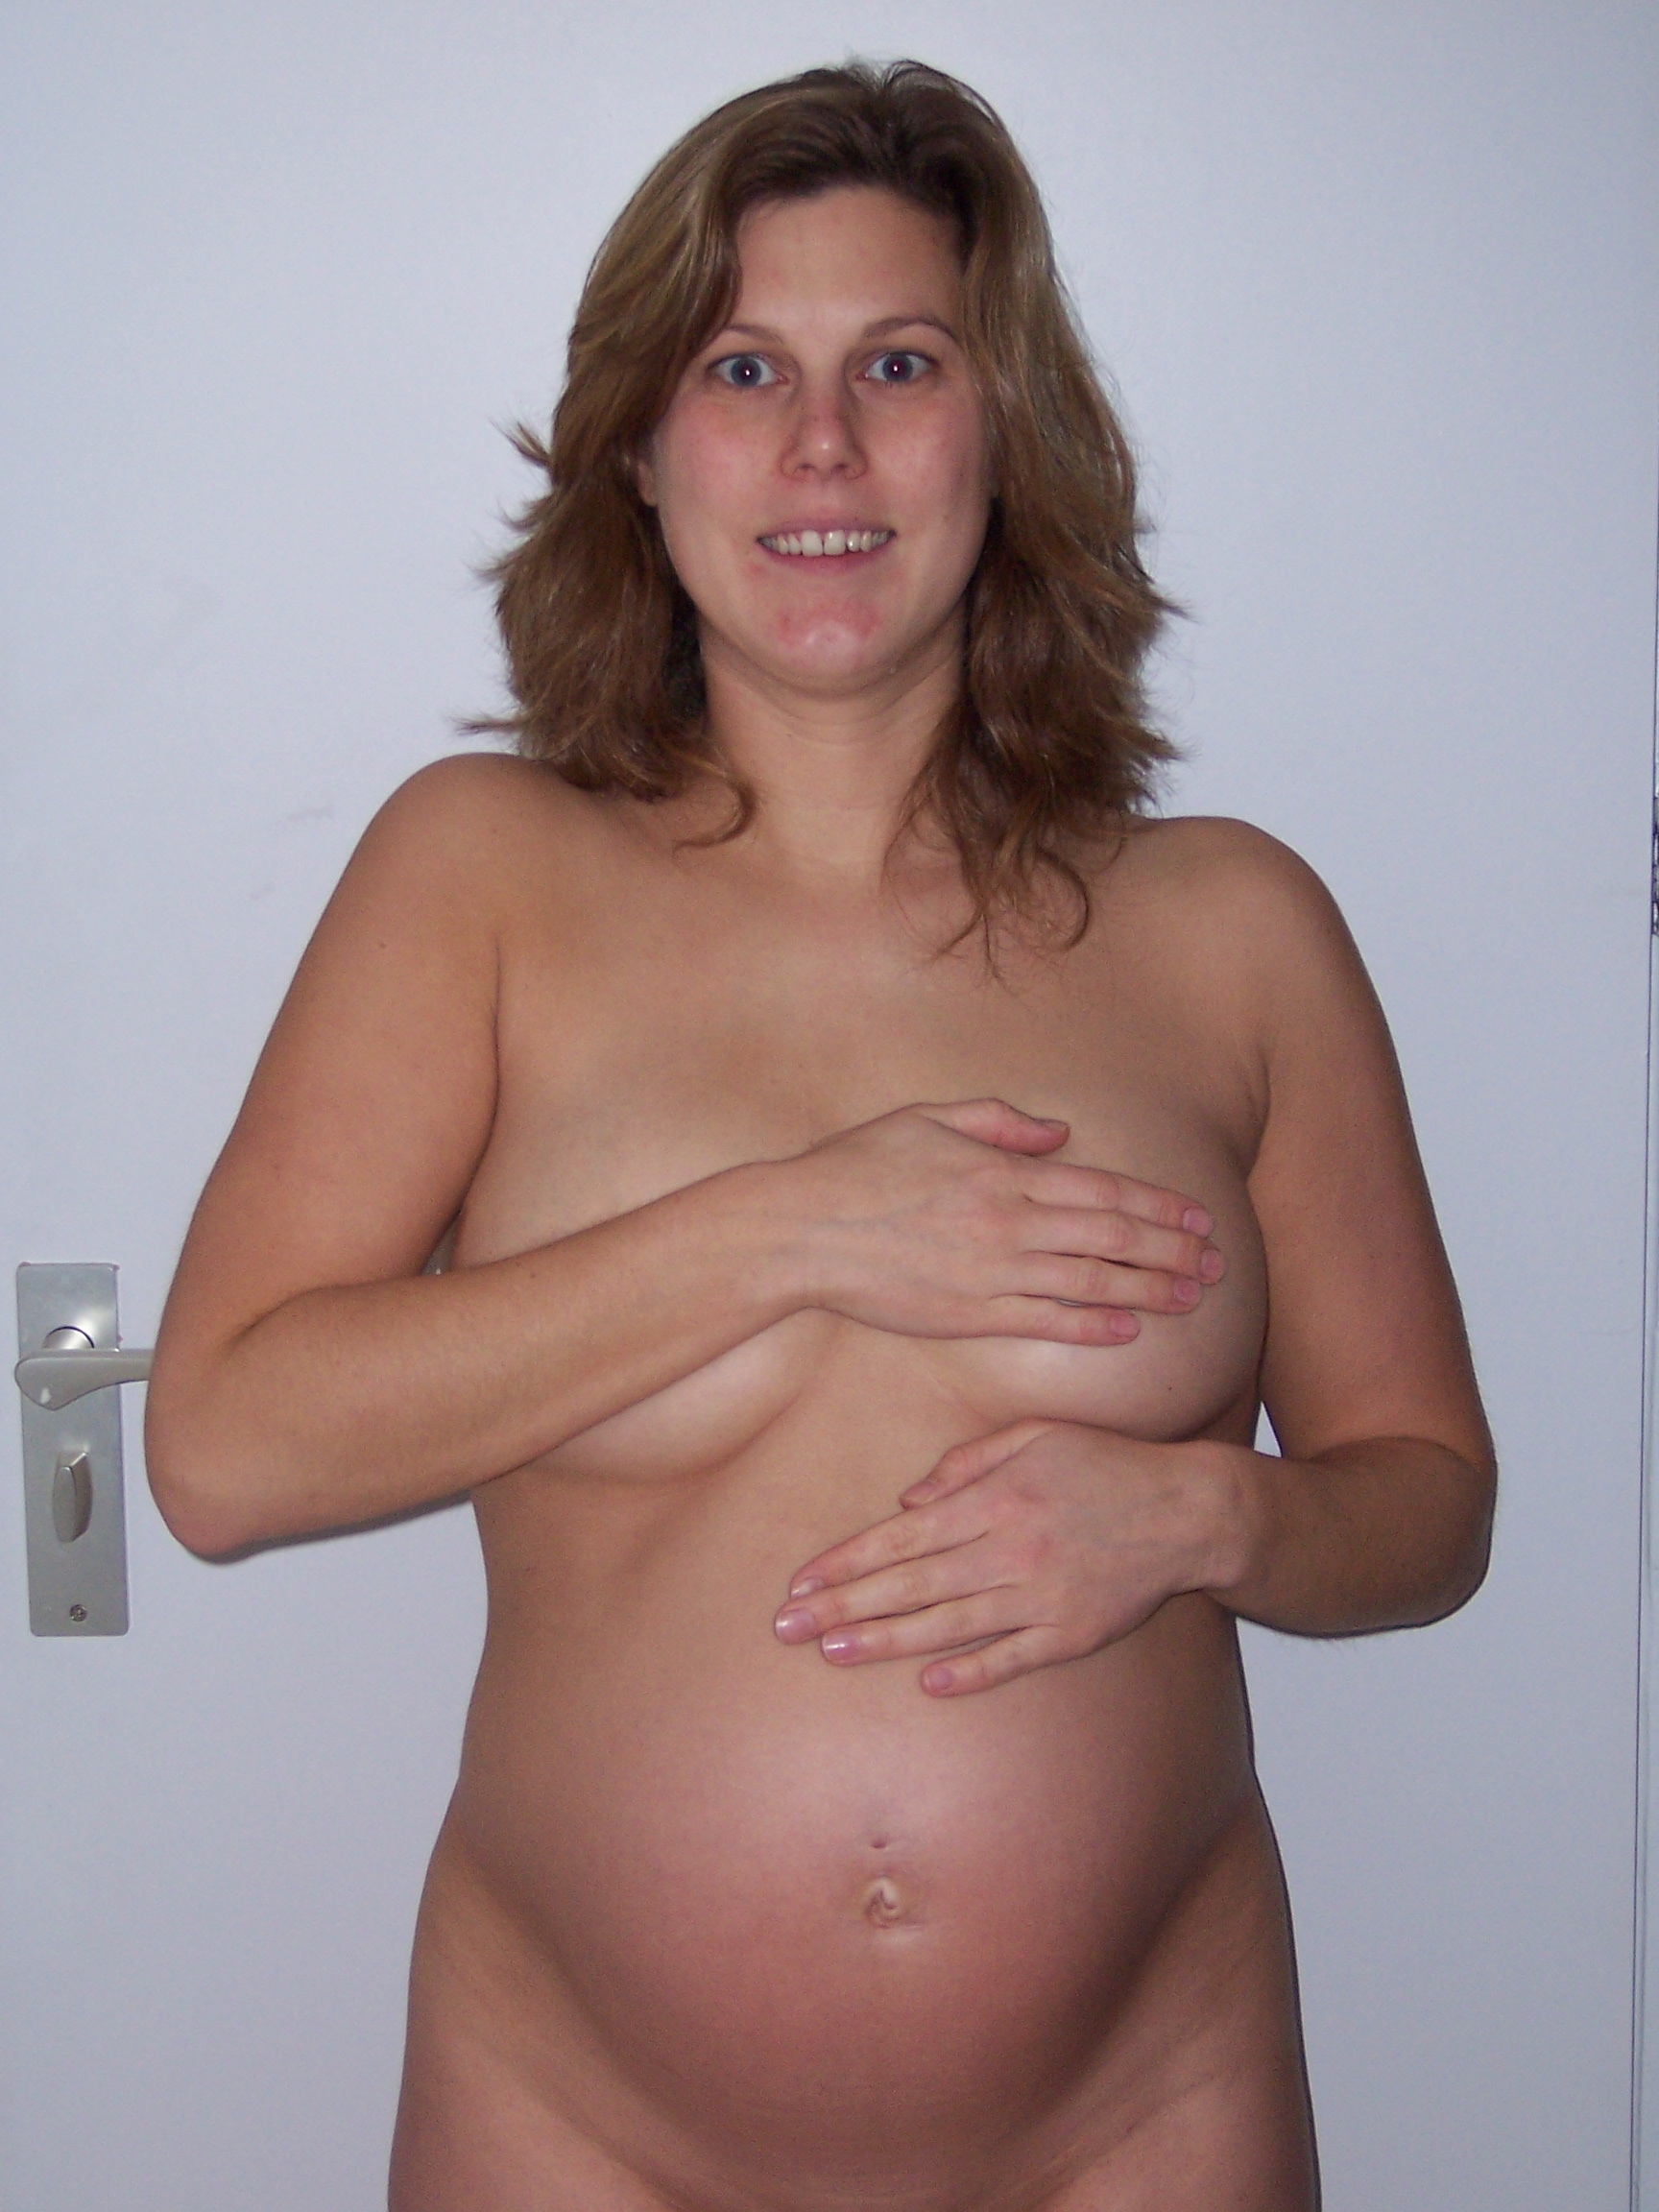 deepti arora add naked pregnant girlfriend photo